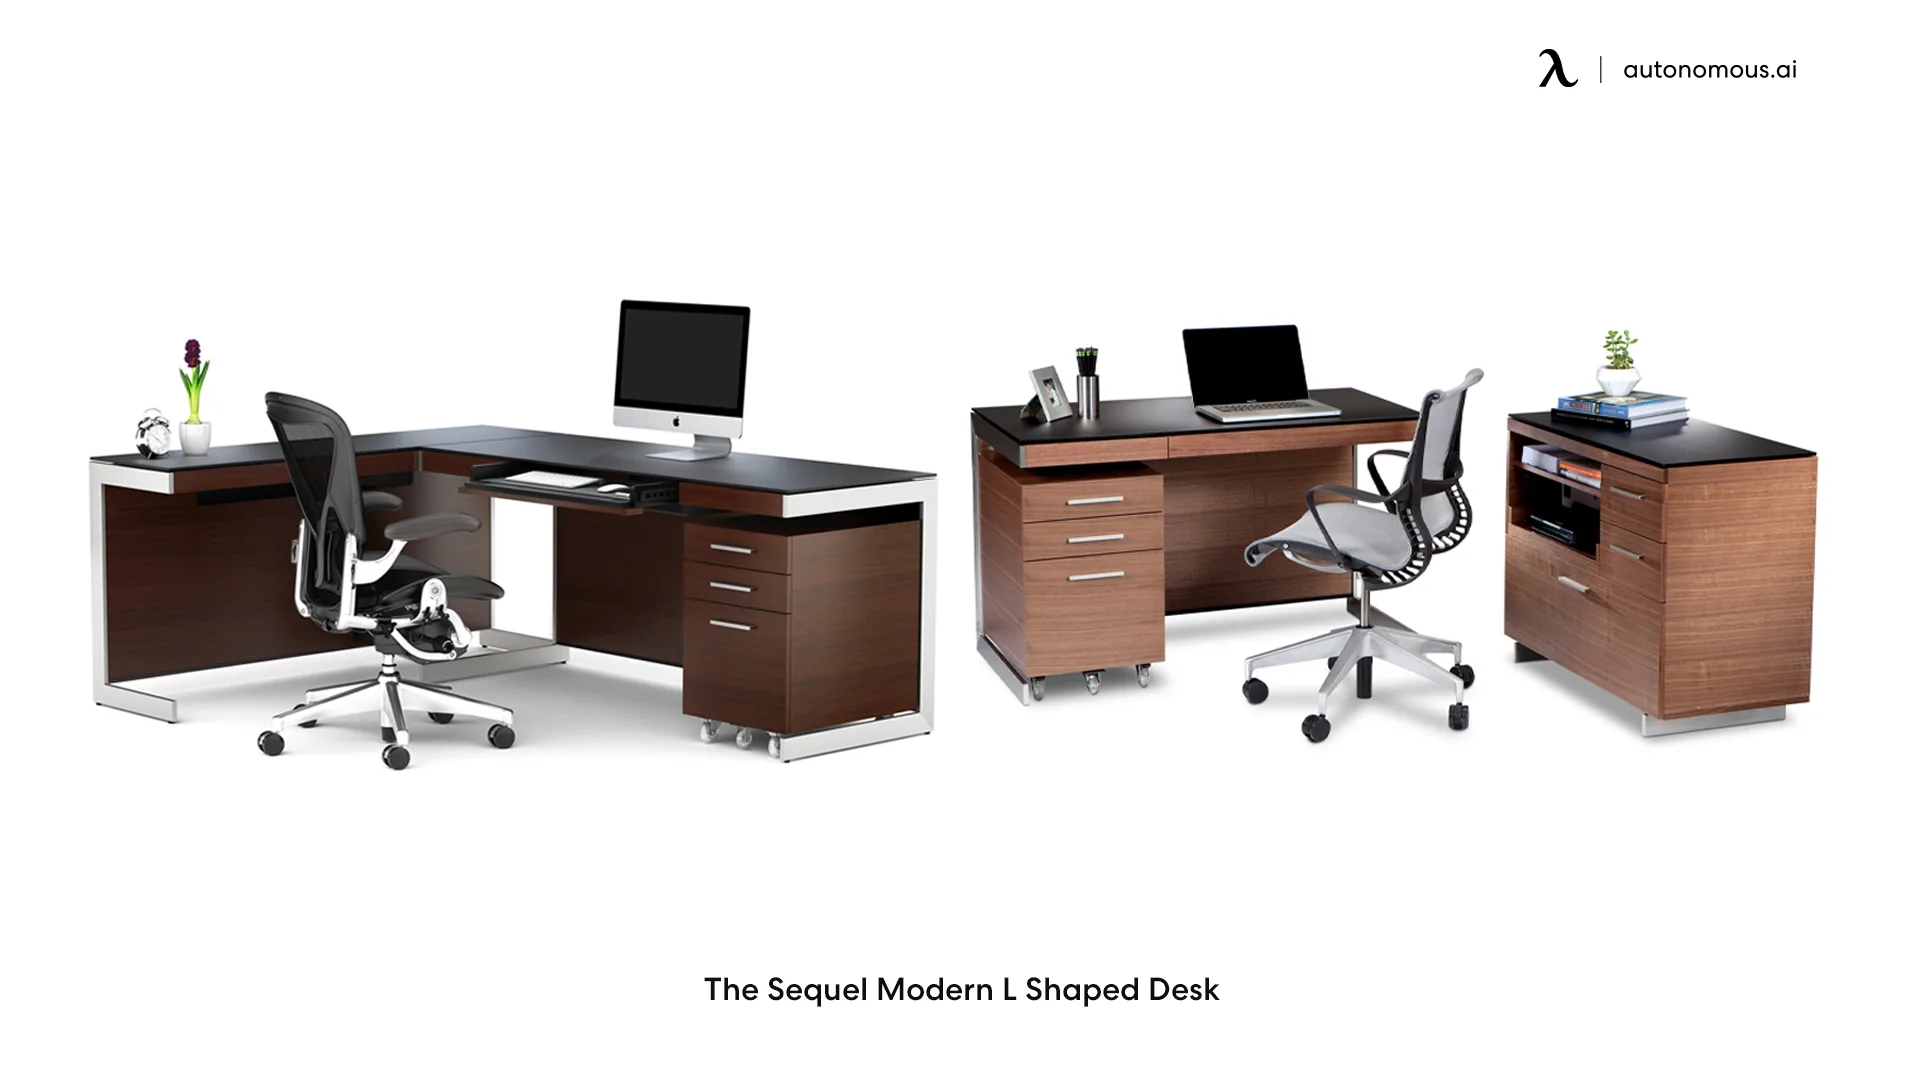 The Sequel Modern L Shaped Desk